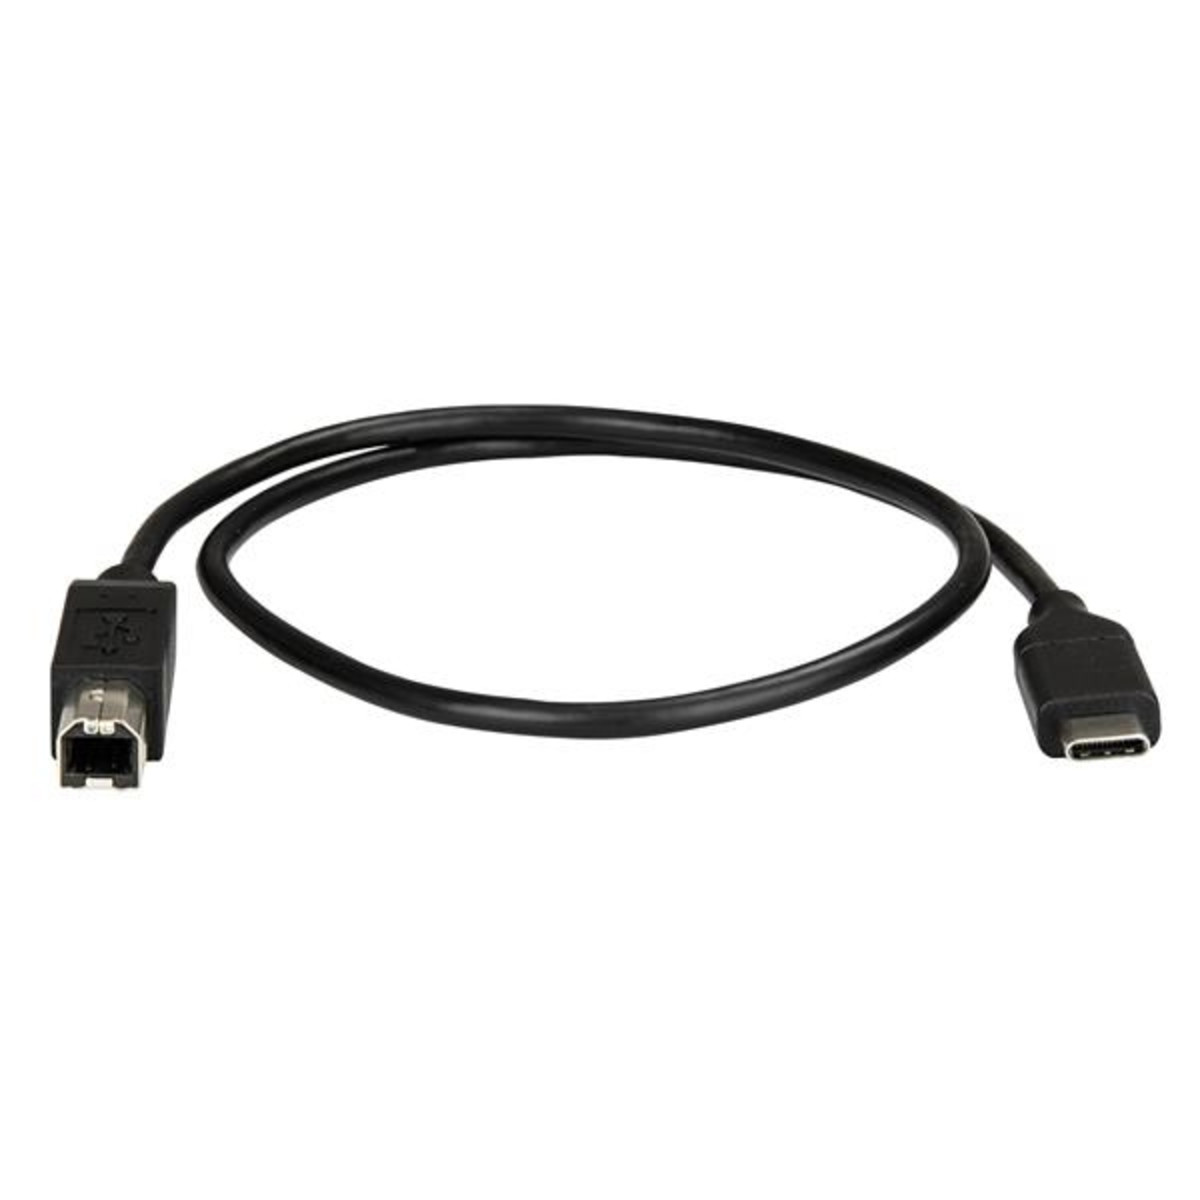 0.5m USB C to USB B Printer Cable